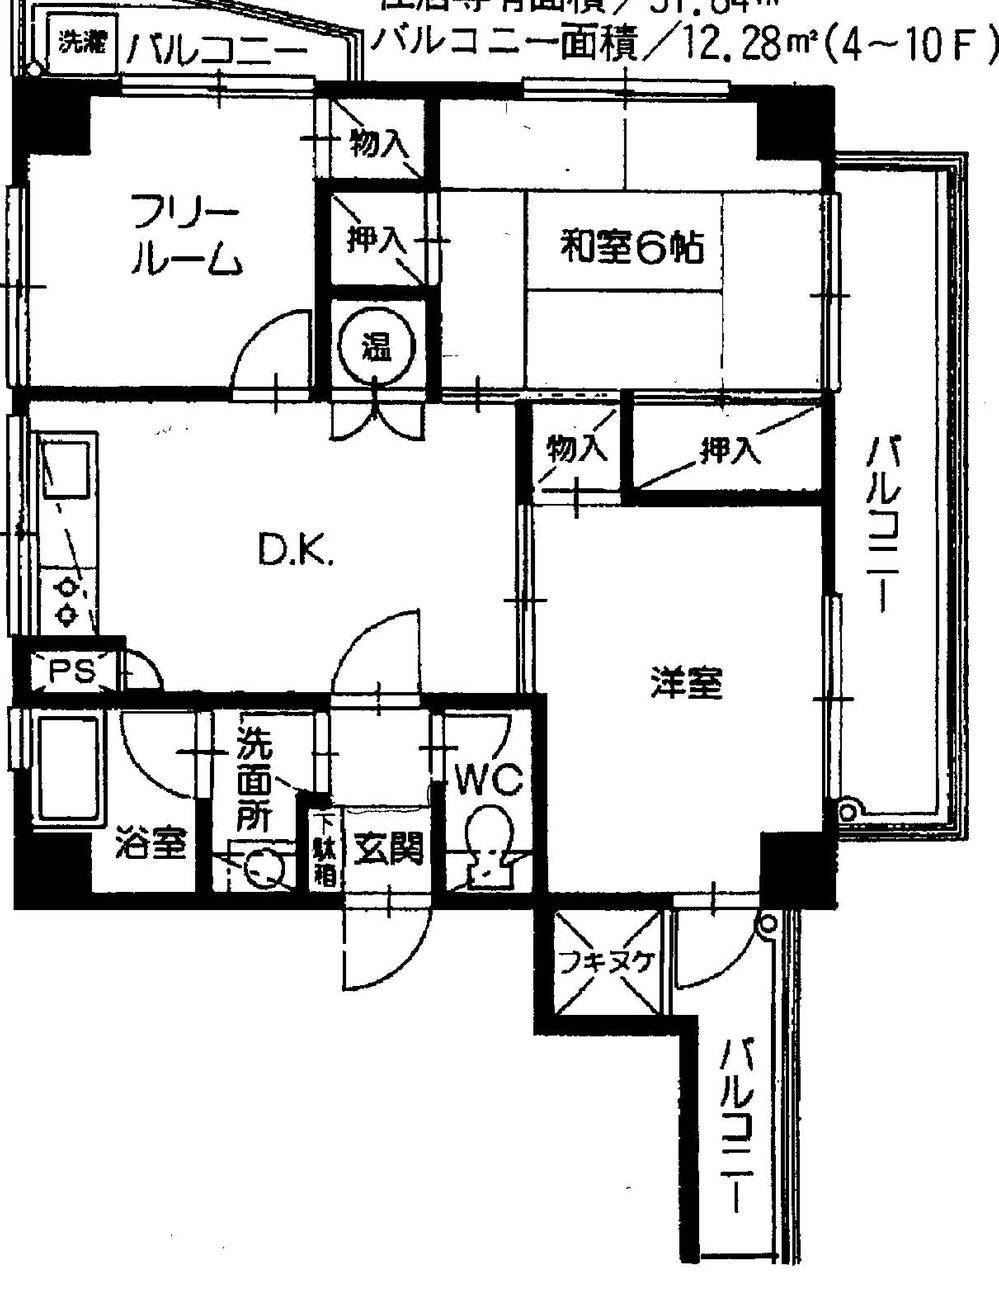 Floor plan. 2LDK, Price 13,880,000 yen, Occupied area 51.84 sq m , Balcony area 12.28 sq m